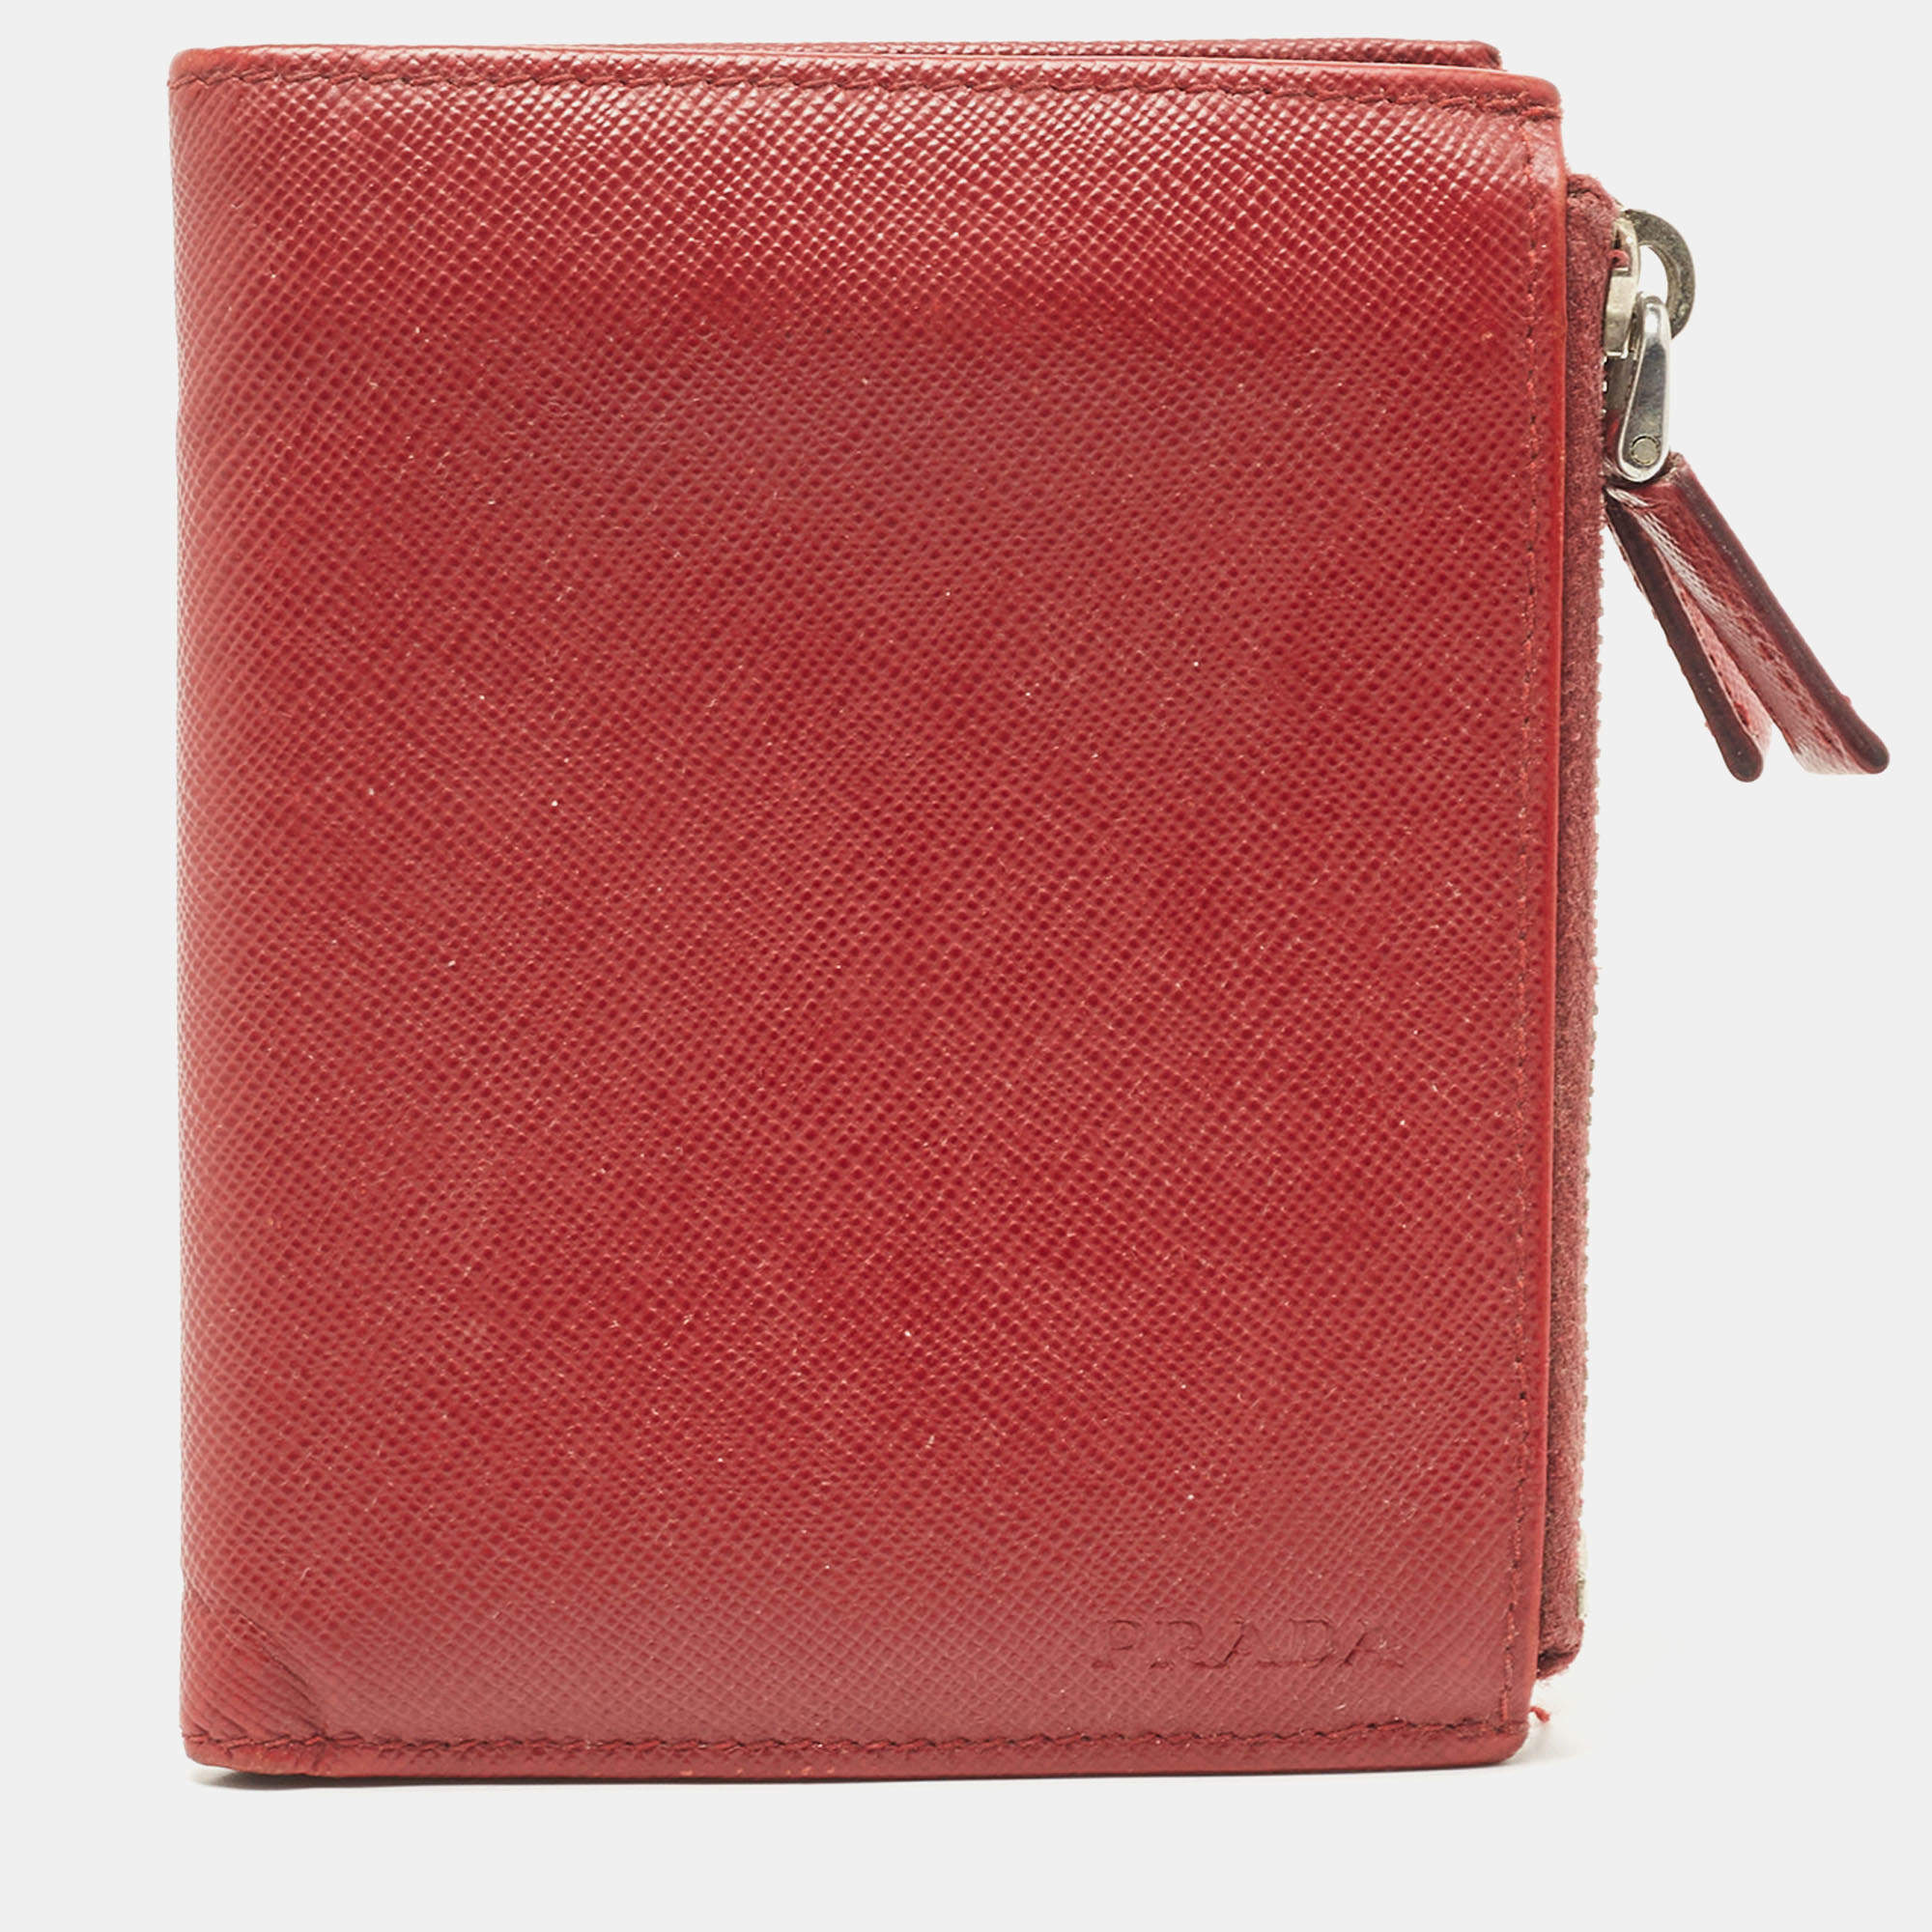 Prada Red Leather Compact Flap Wallet Prada